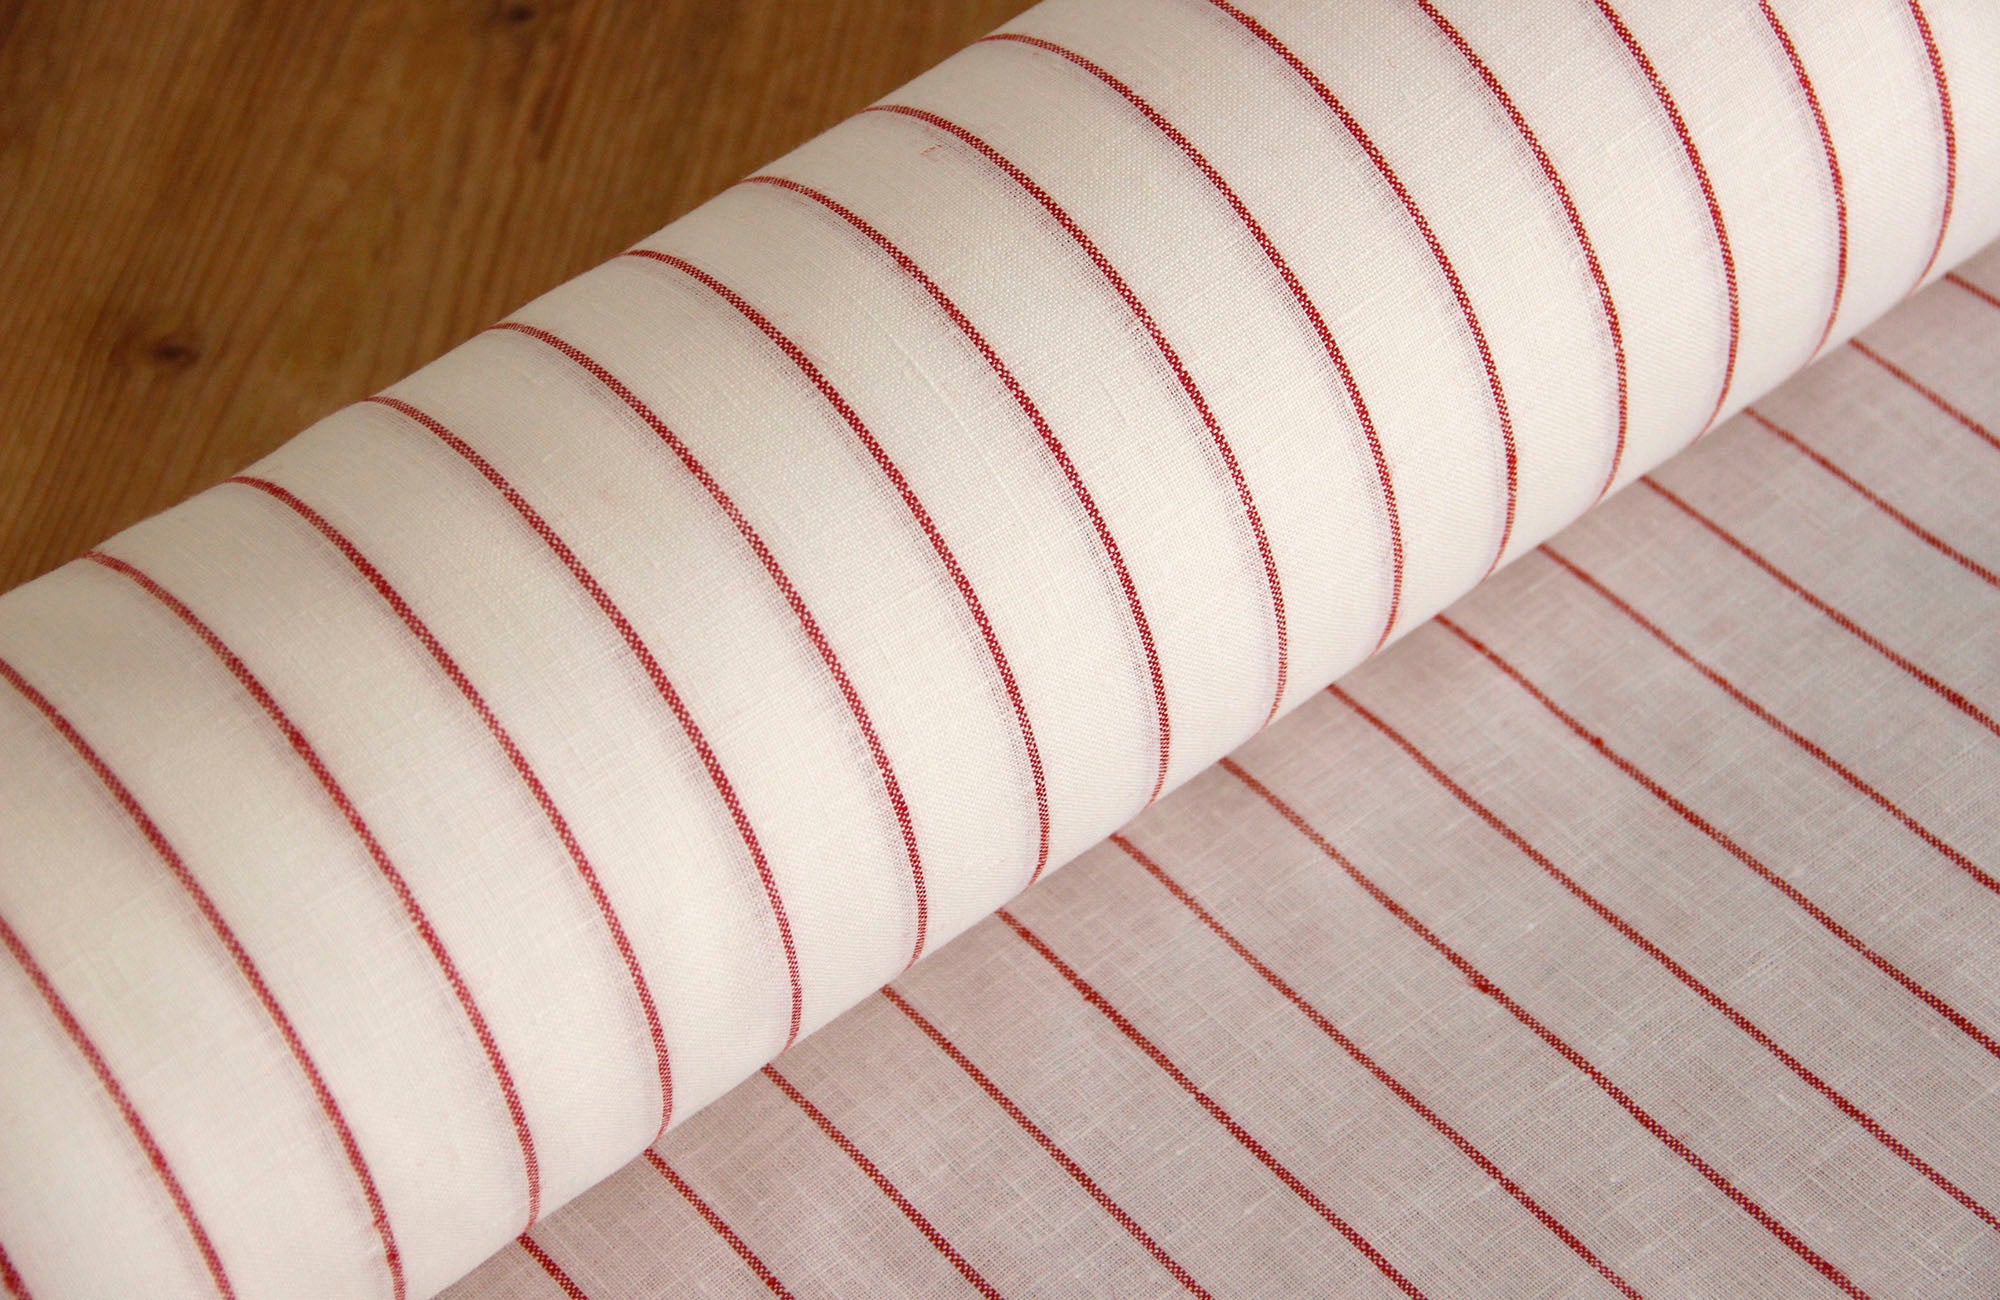 Buy fine-stripes Linen red/white * From 50 cm